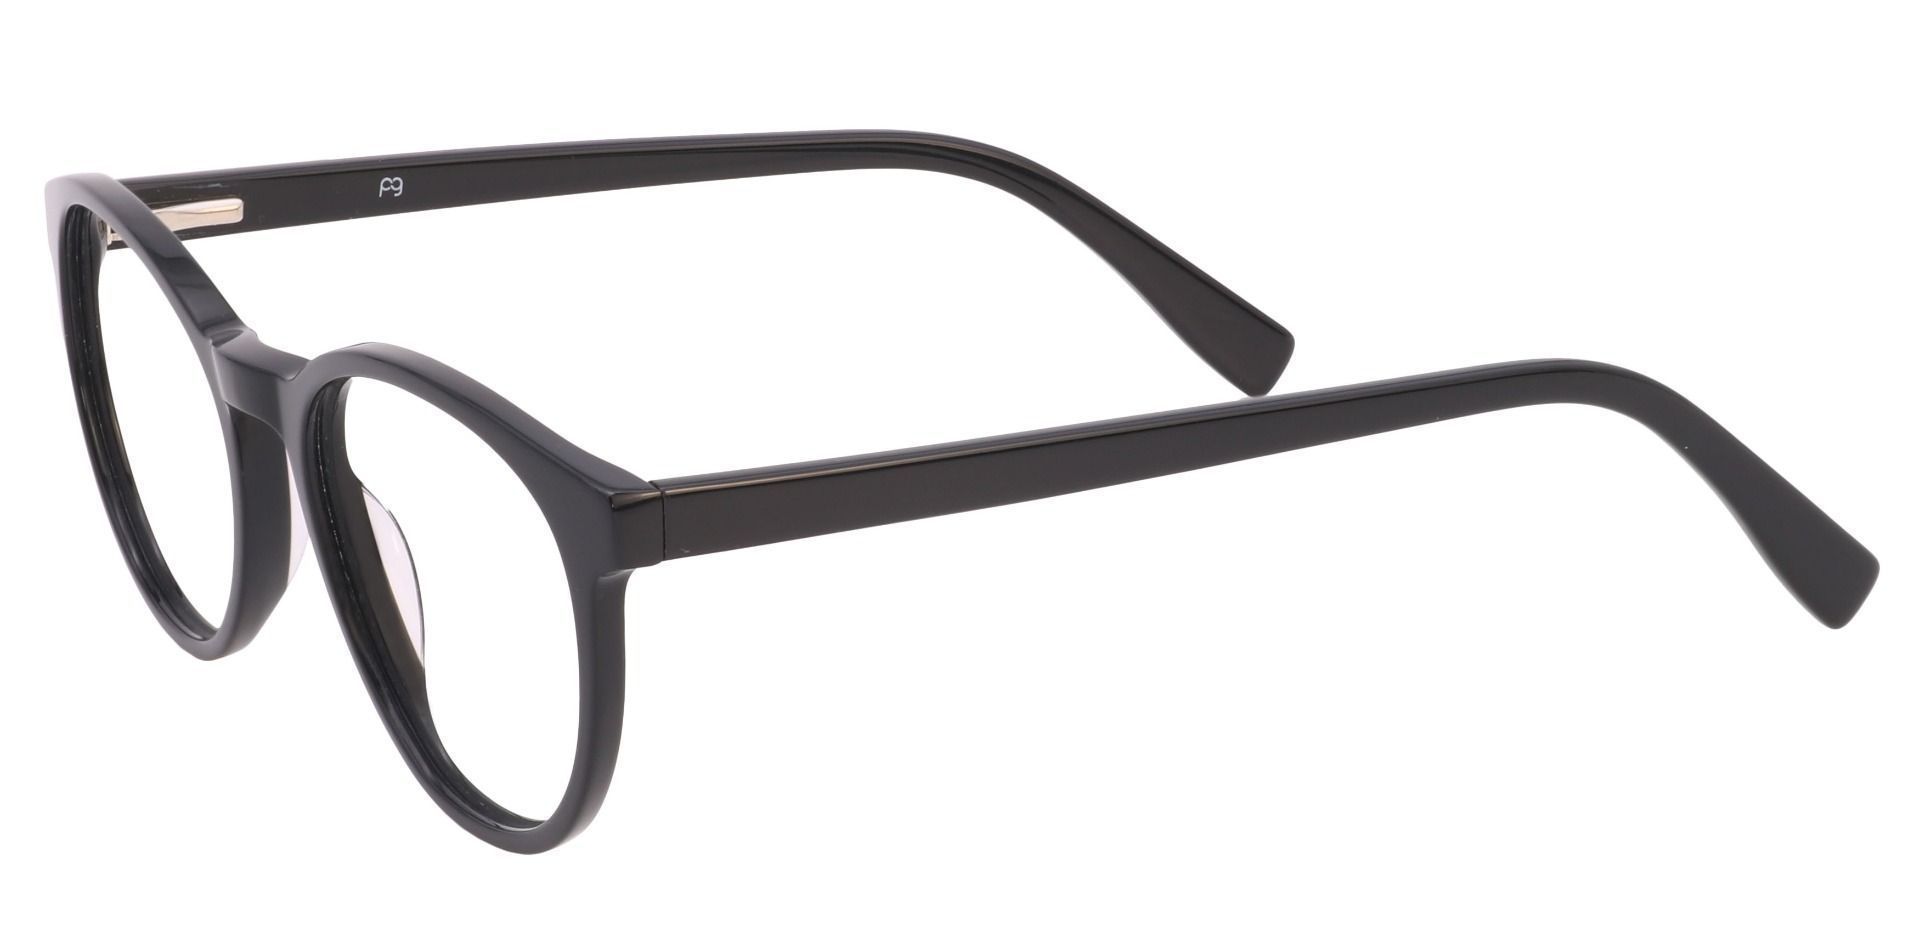 Stellar Oval Eyeglasses Frame - Black